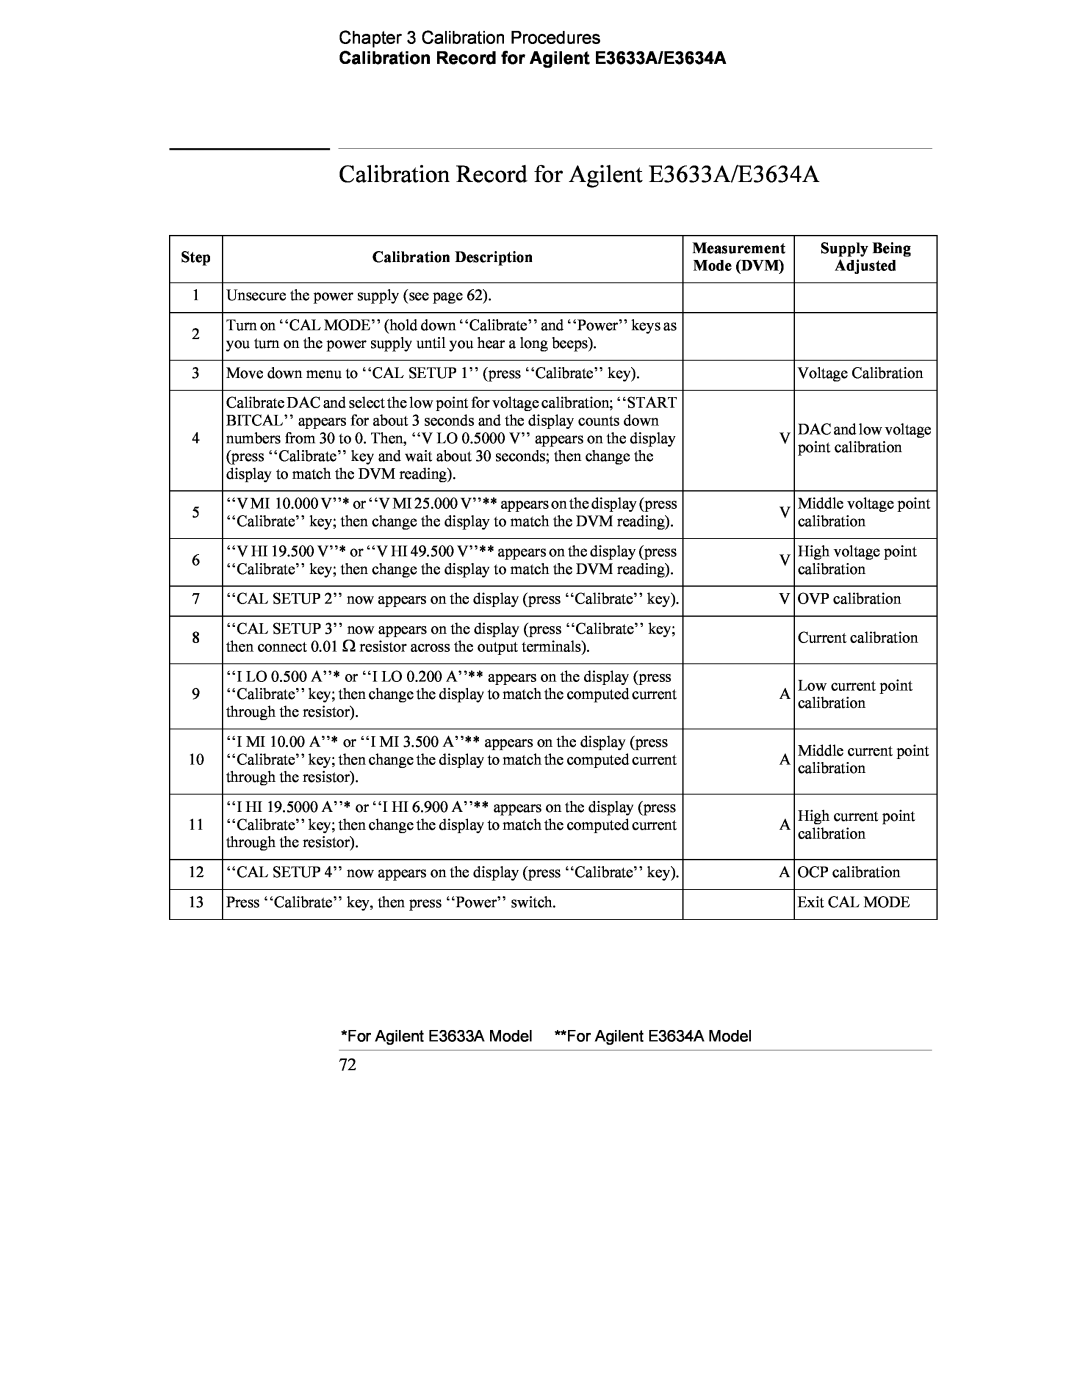 Agilent Technologies manual Calibration Record for Agilent E3633A/E3634A, Calibration Procedures 